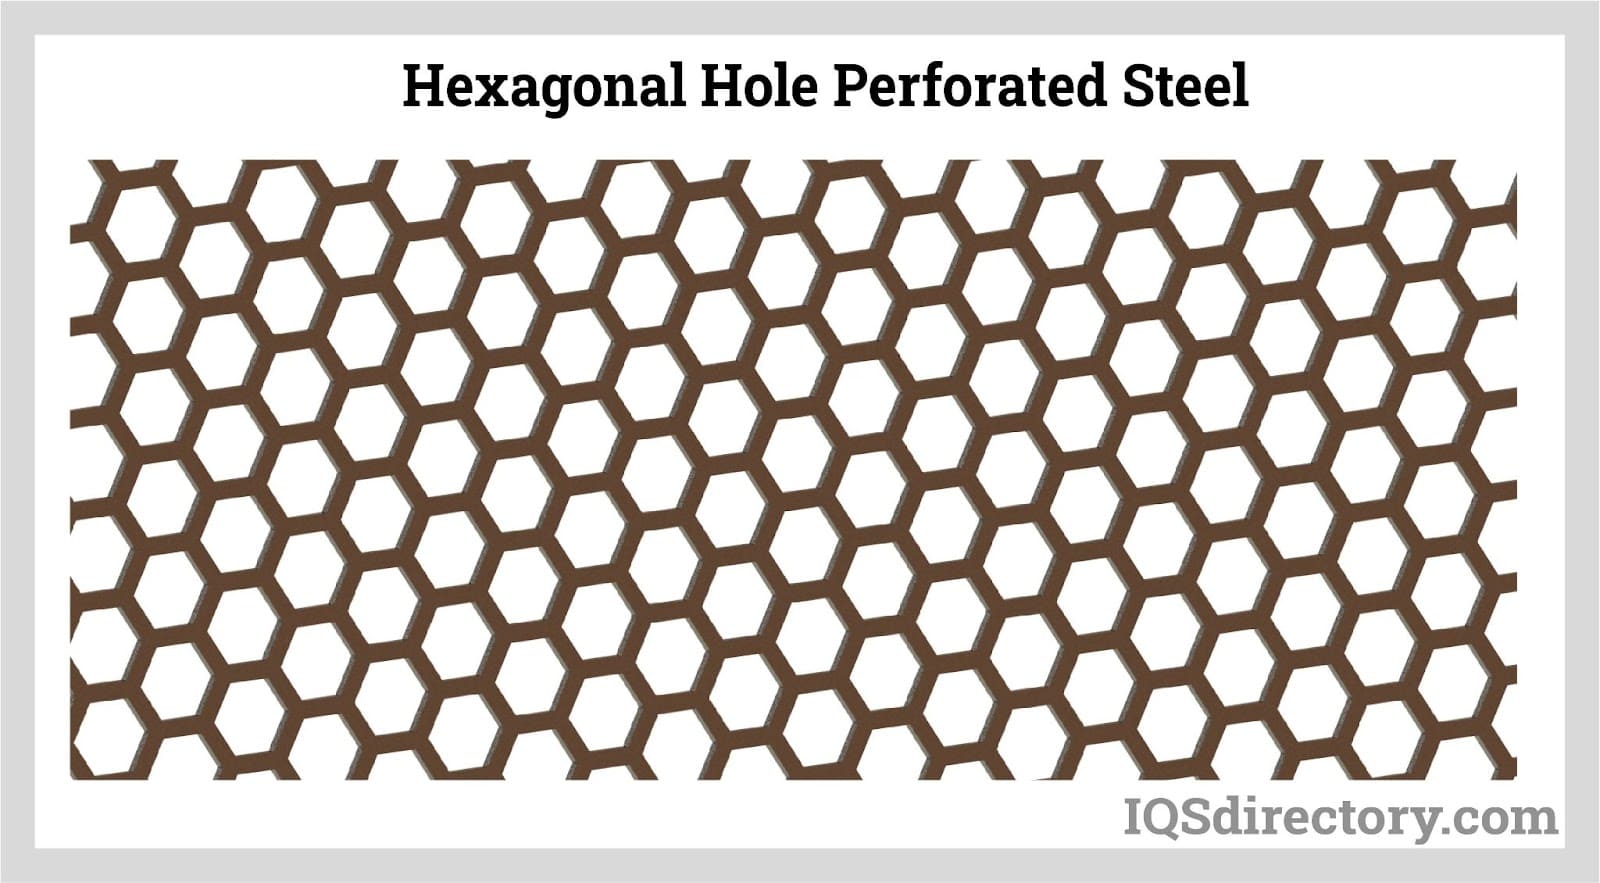 Hexagonal Hole Perforated Steel